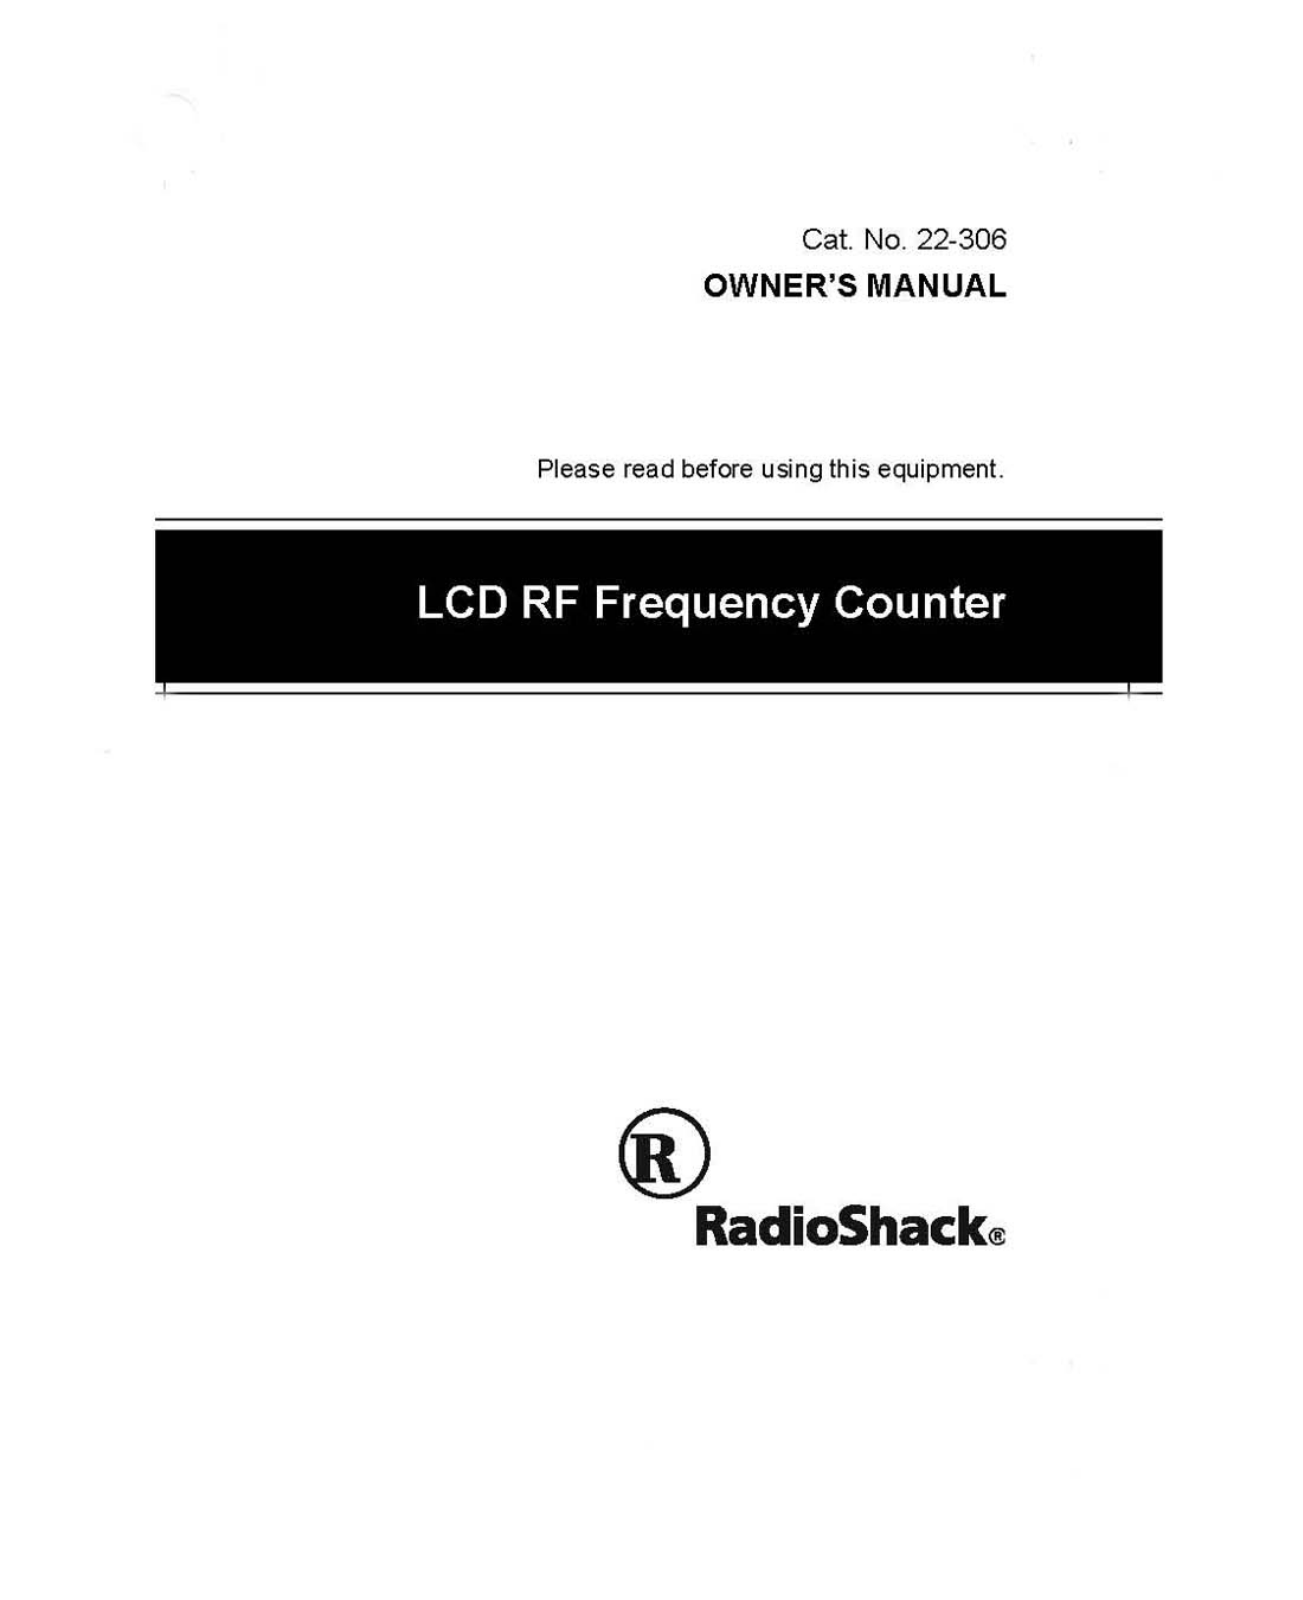 RadioShack 22-306 Owner Manual